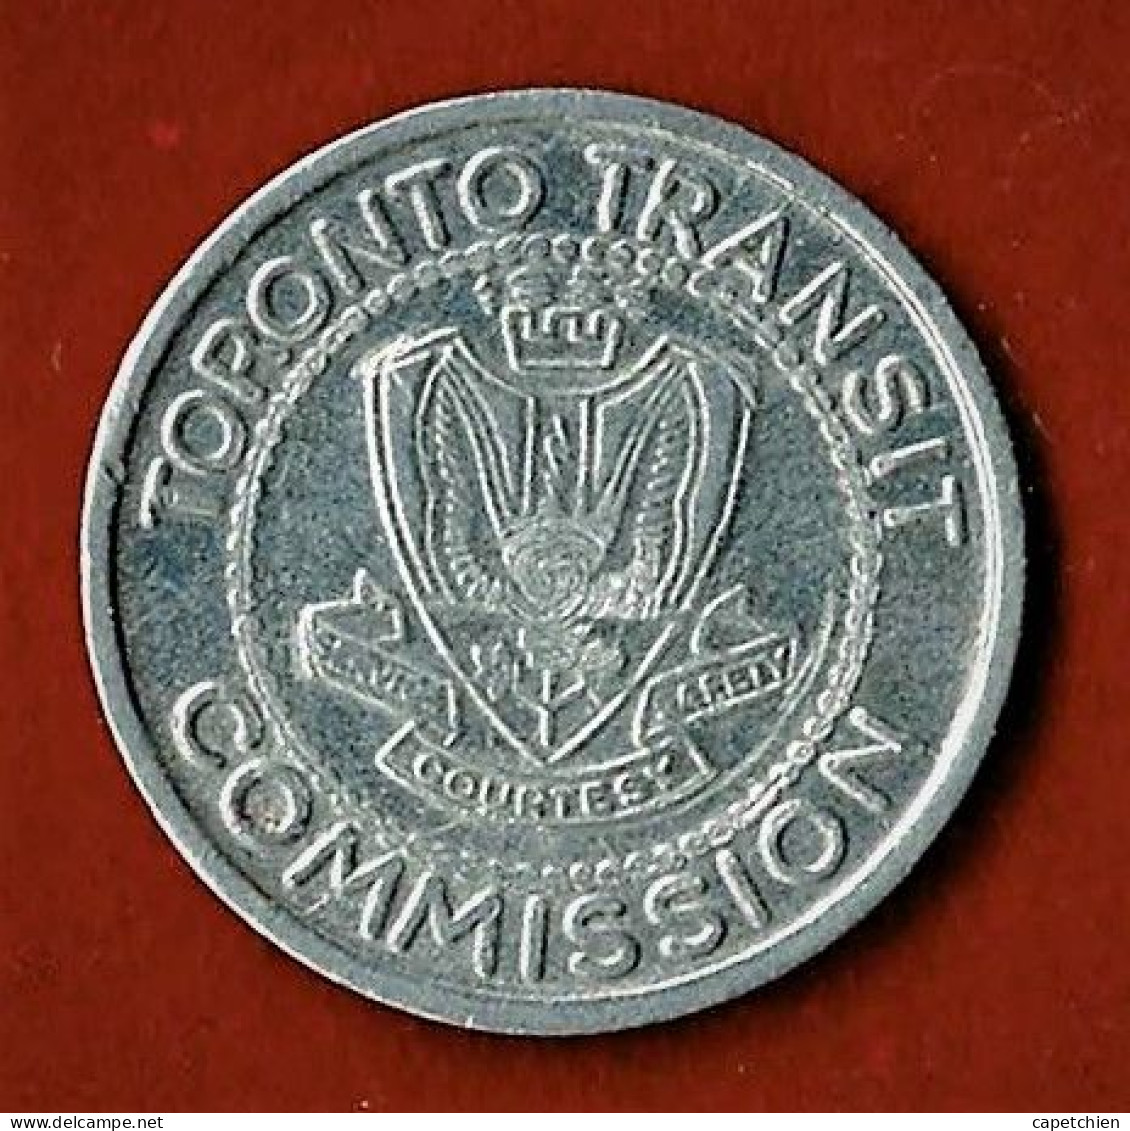 CANADA /  TOKEN / TORONTO TRANSIT COMMISSION / NECESSITE / ALU / N.D. - Firma's